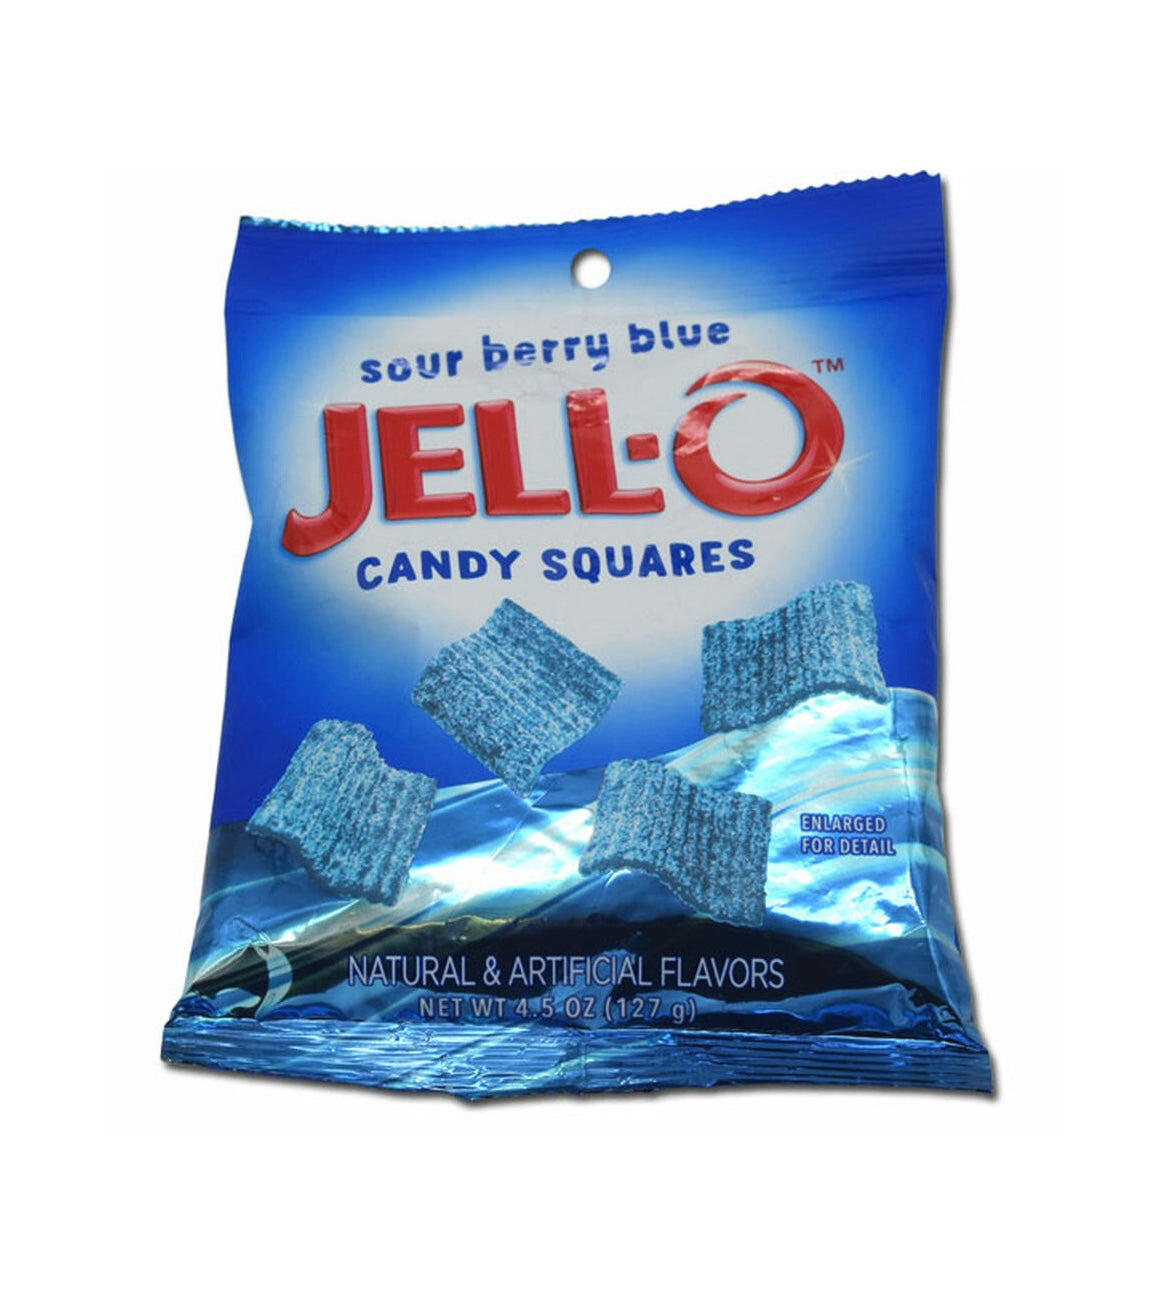 Slime lickers sour soda blue raspberry – JoJo's Candy